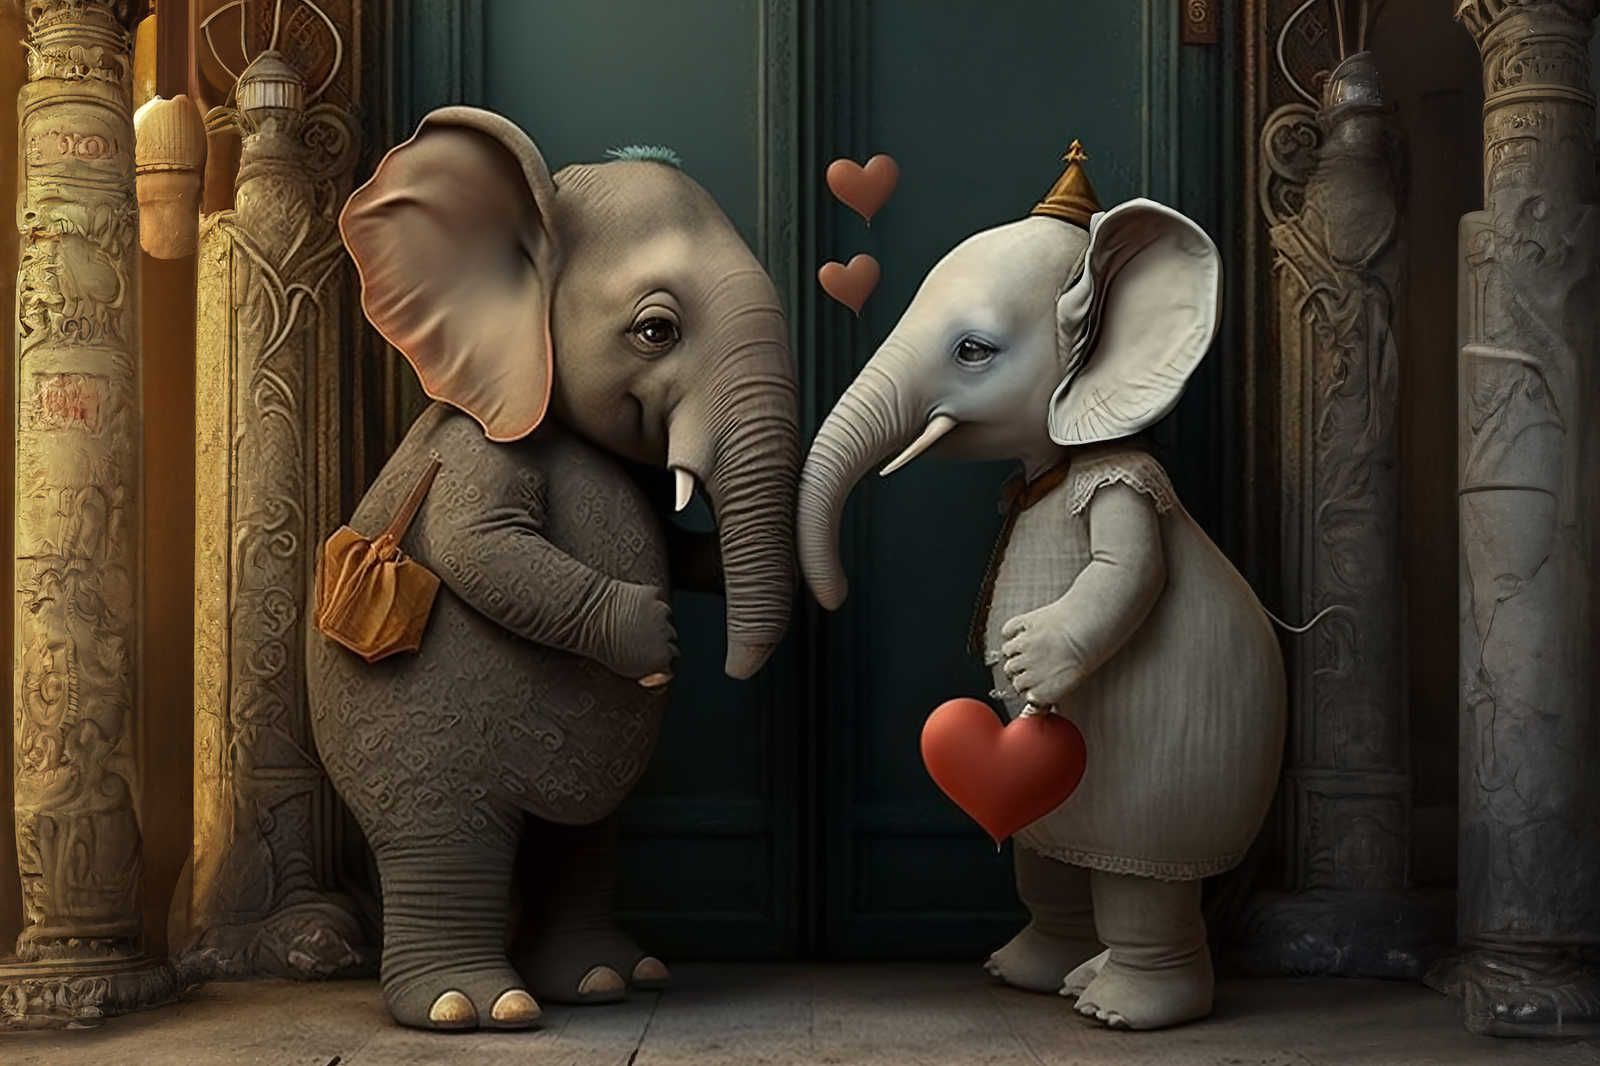             KI Canvas schilderij »elephant love« - 120 cm x 80 cm
        